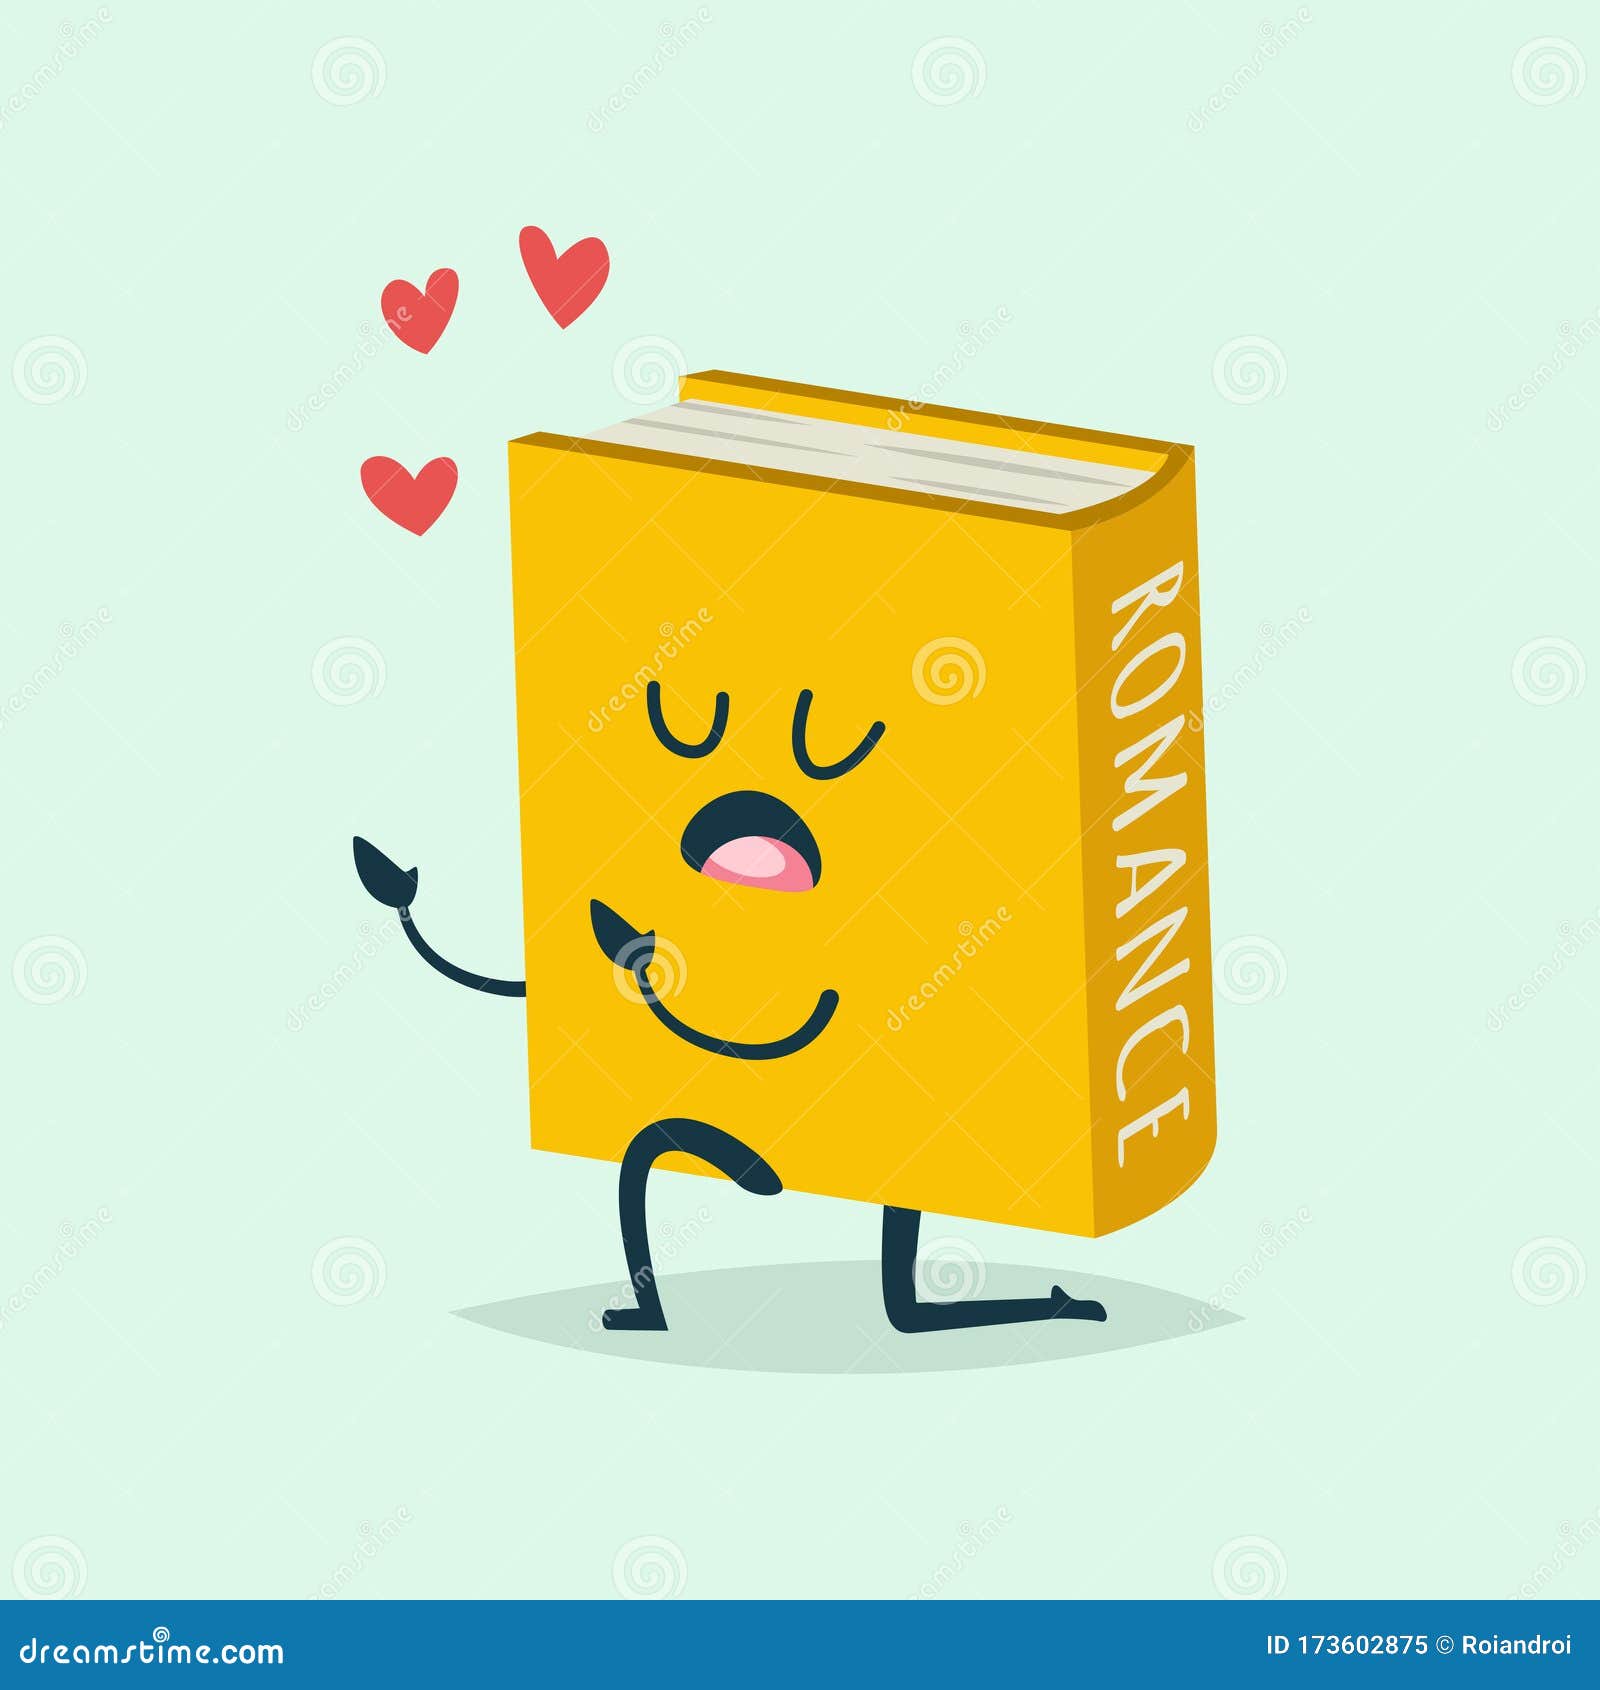 Funny Books Vector Cartoon Character Stock Vector - Illustration of icon,  logo: 173602875